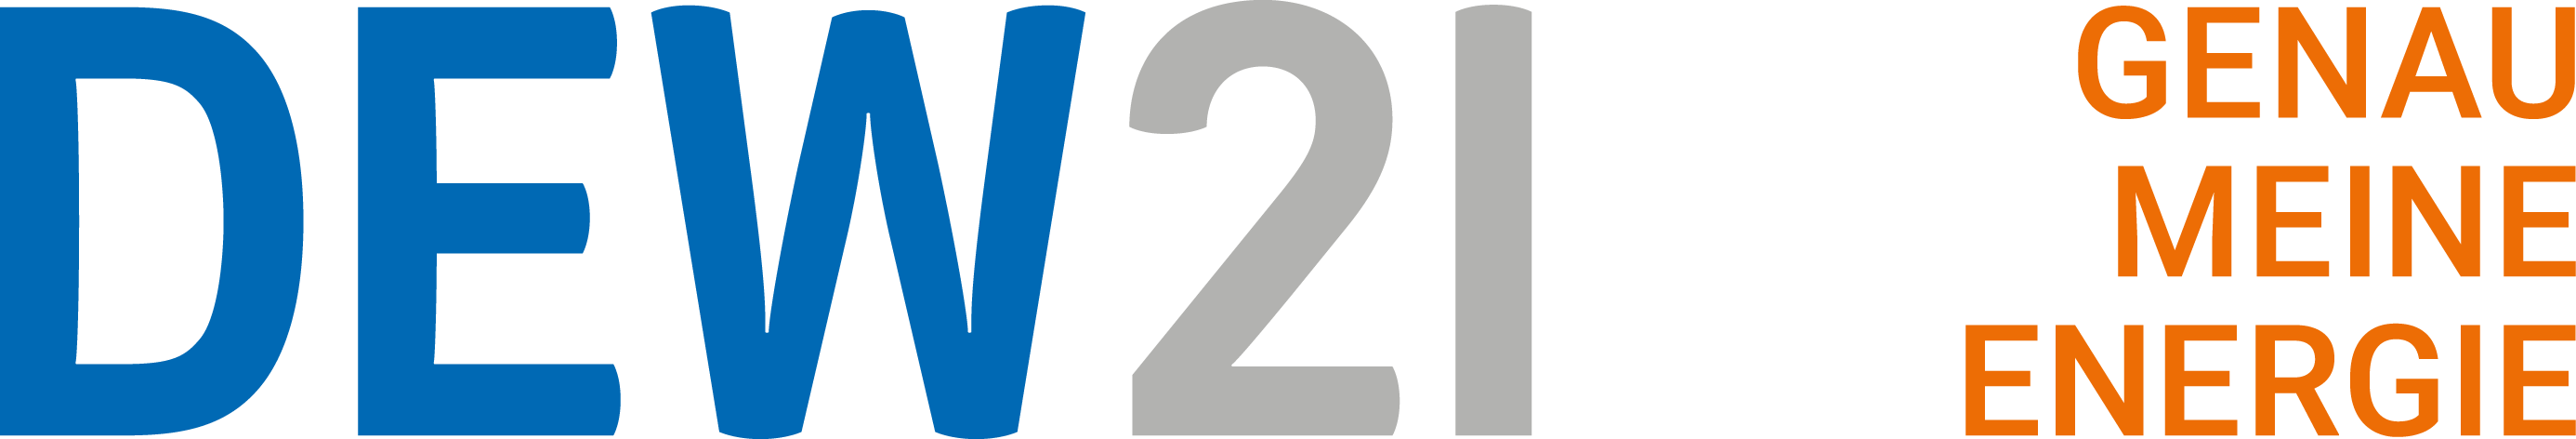 dew21_Logo+Claim_4c-2.png